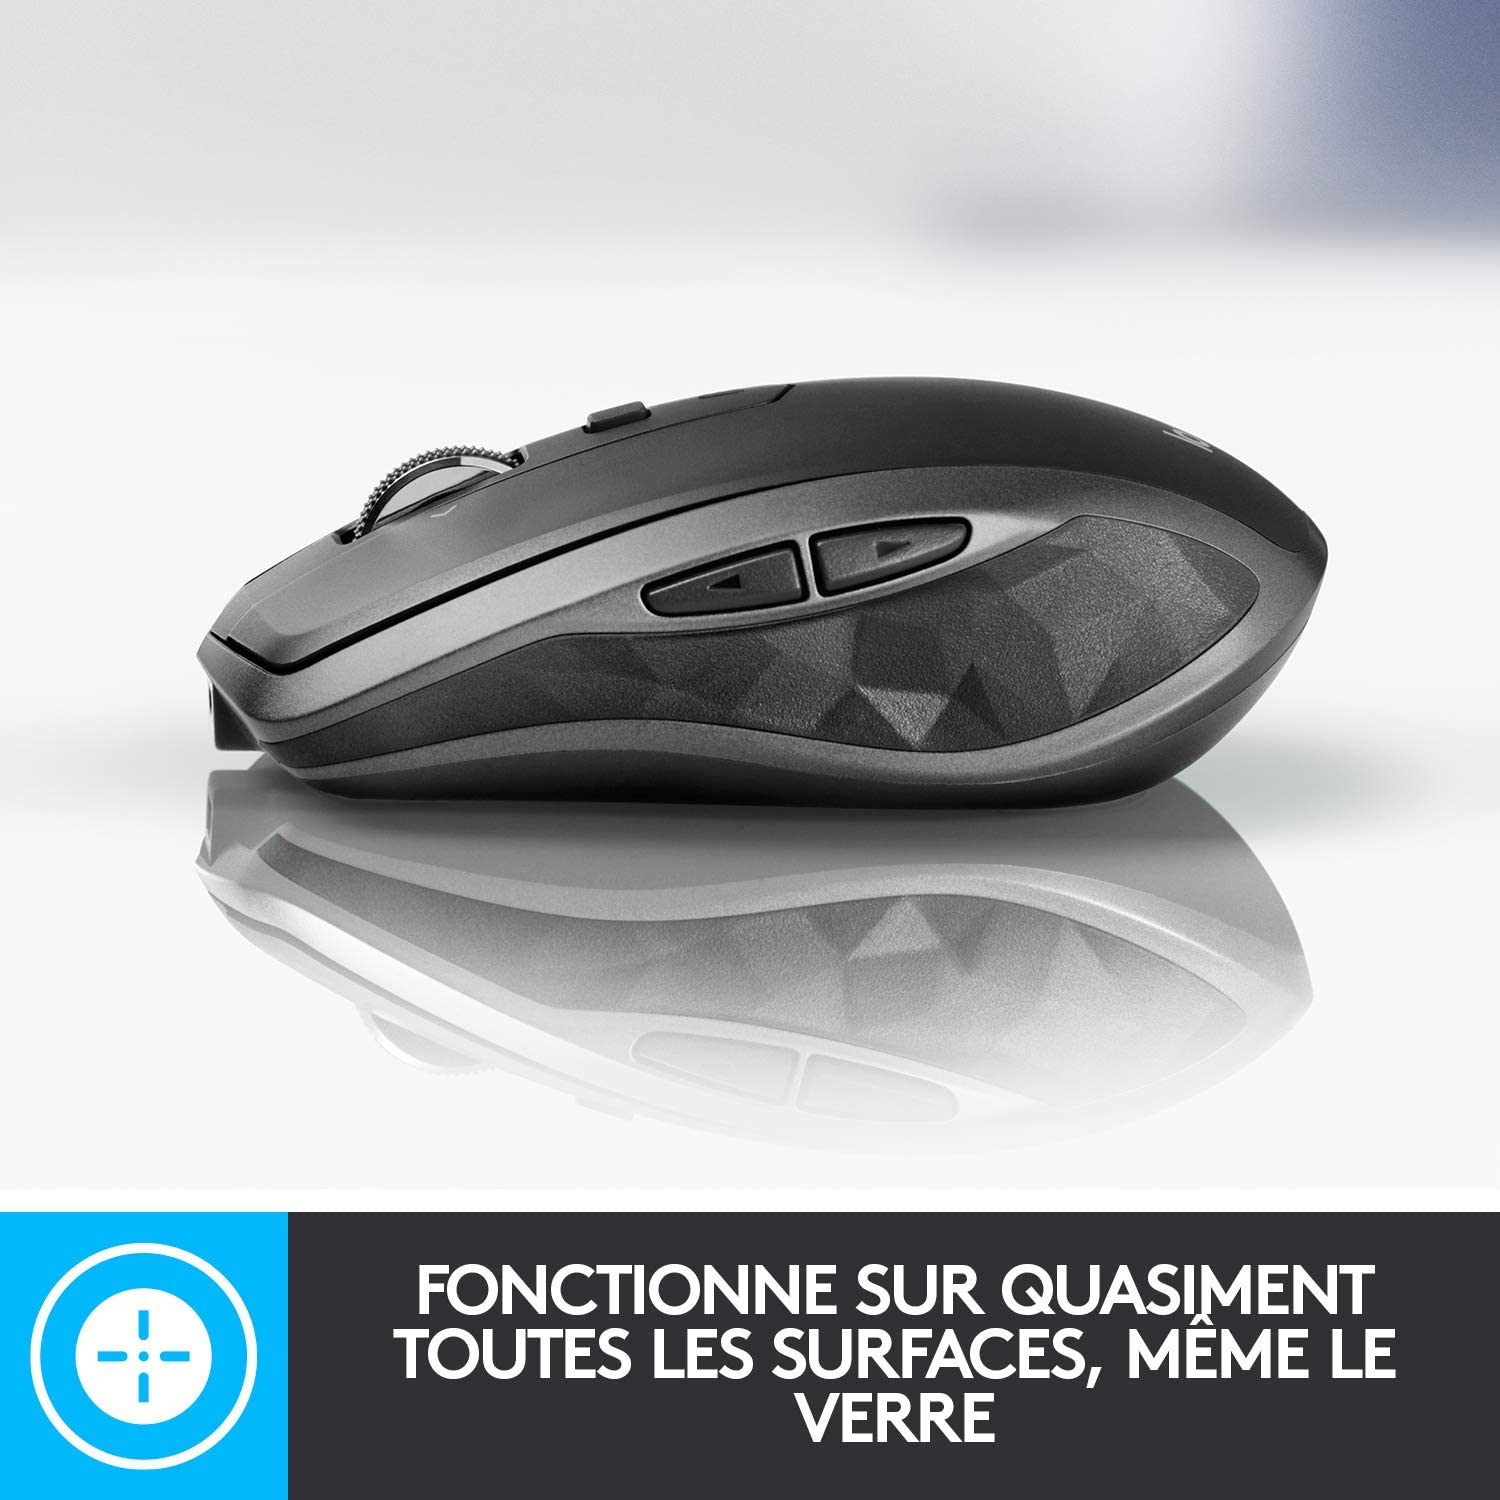 Logitech MX Anywhere 2S Wireless Mouse, Multi-Device - Graphite Black